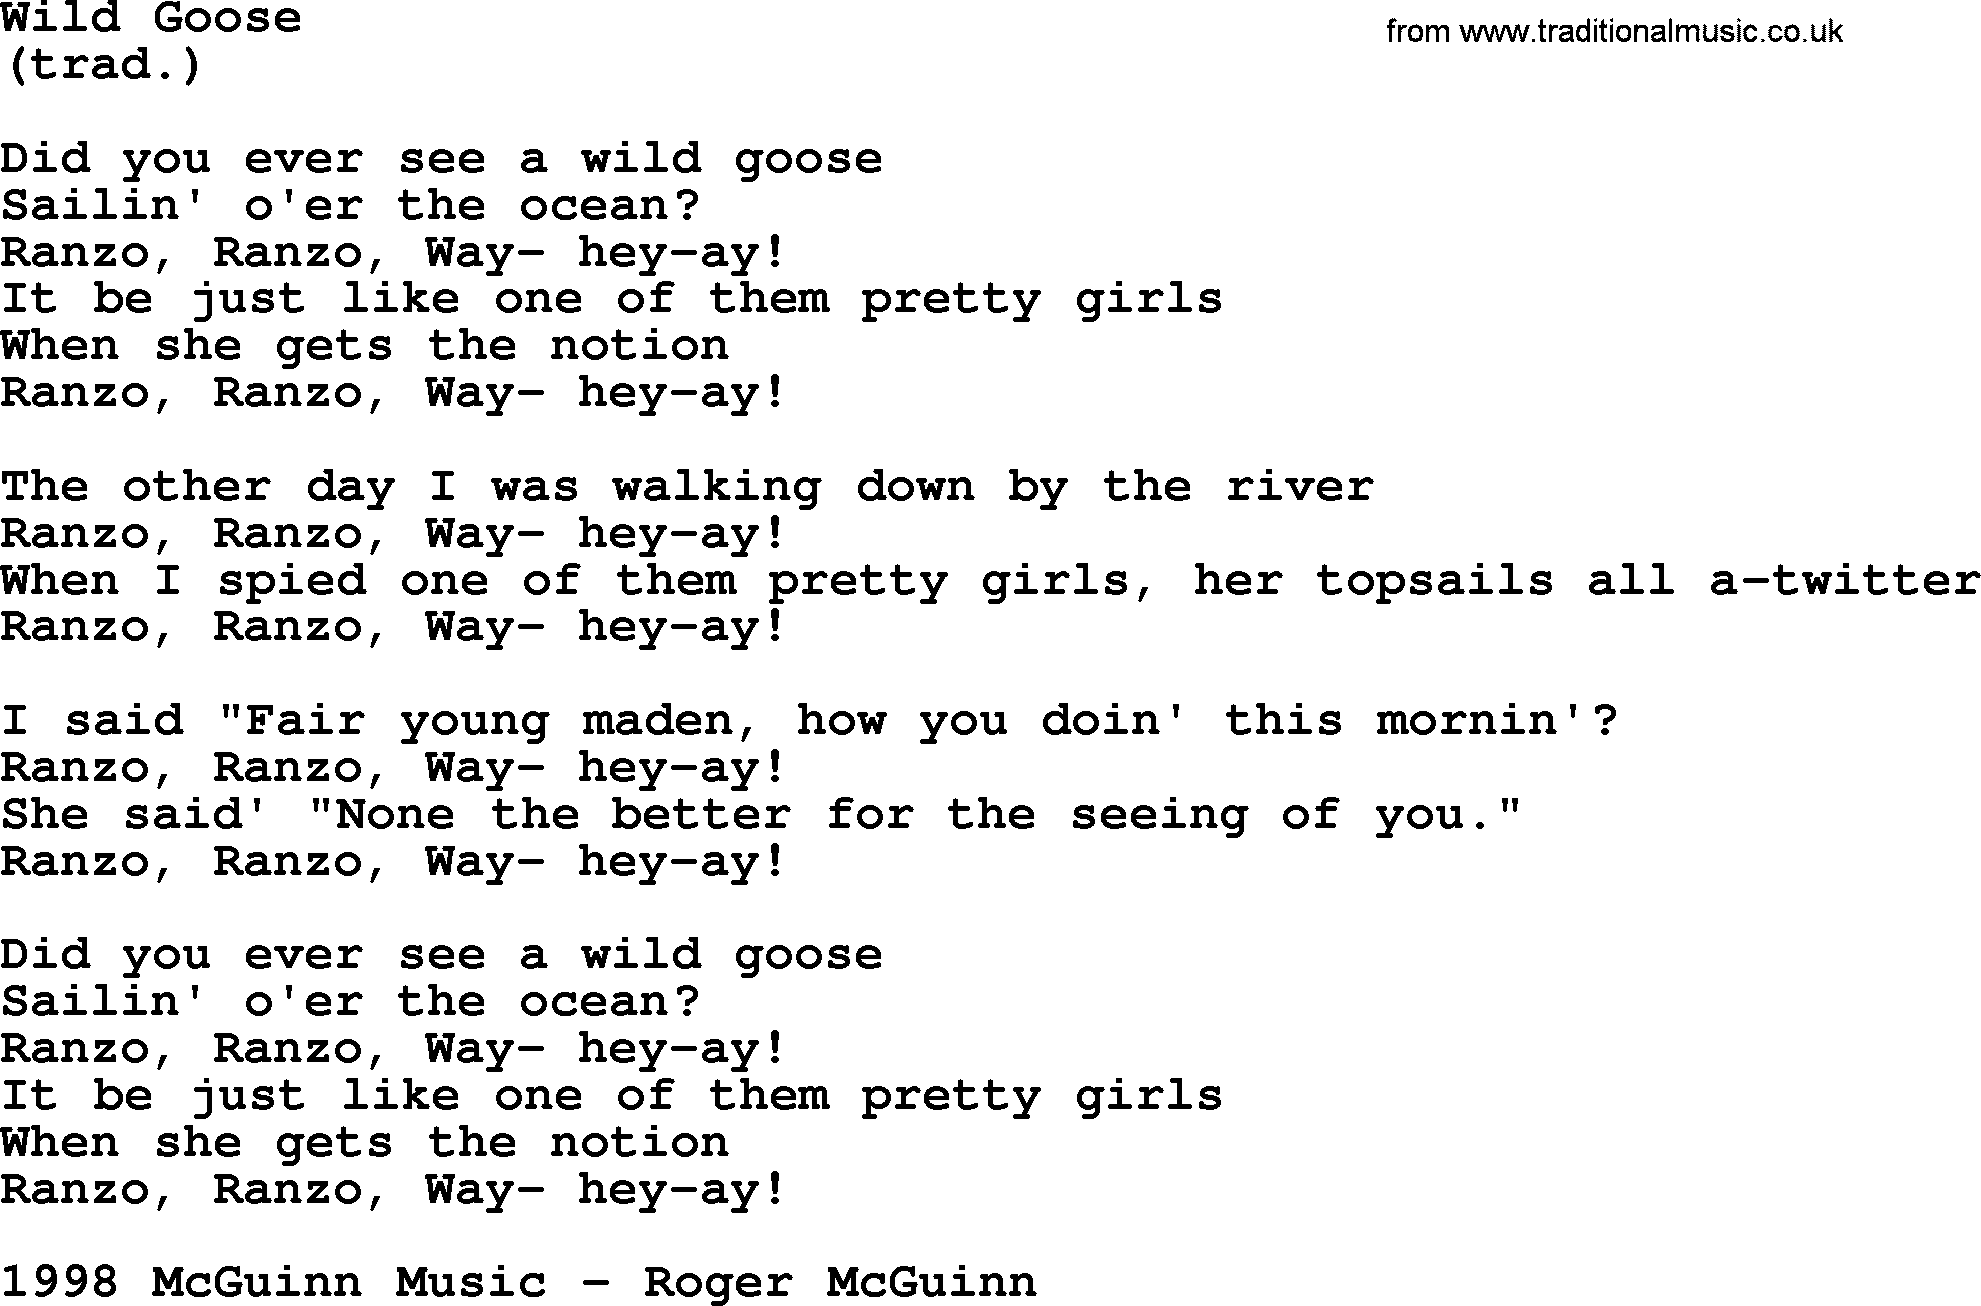 The Byrds song Wild Goose, lyrics